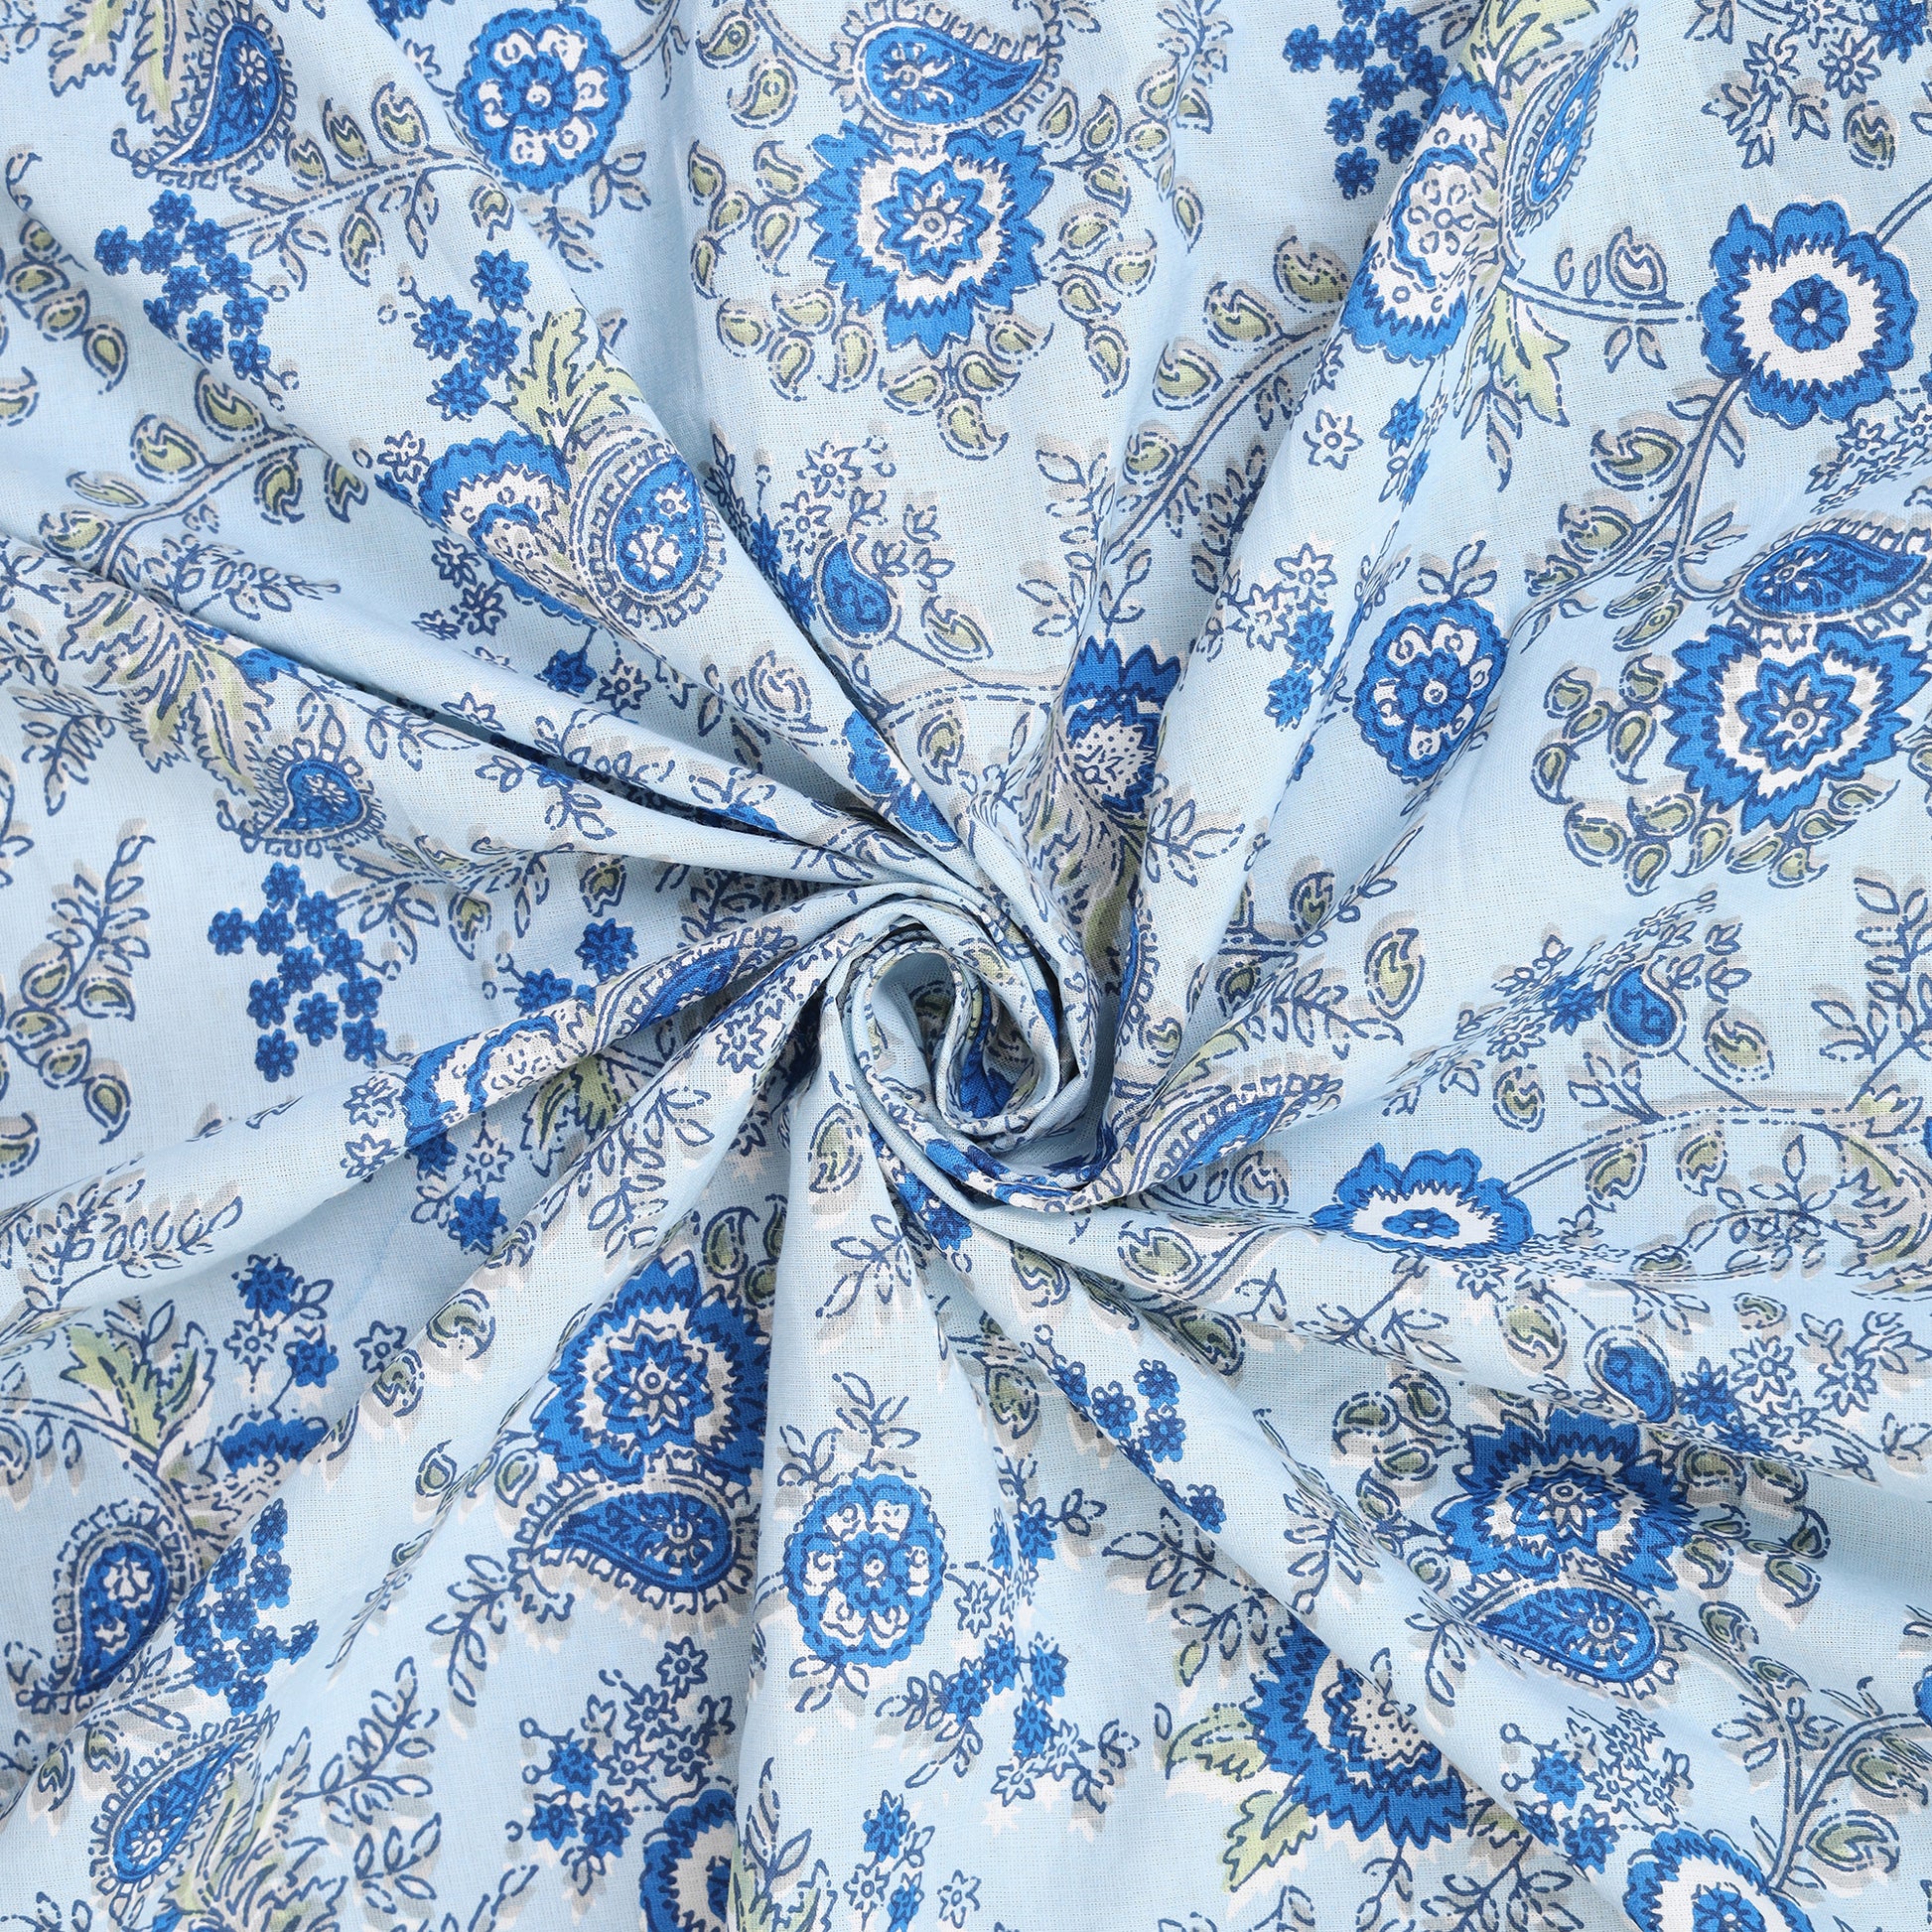 Pure Cotton Block Print Jaipuri Bedsheet - Super King Size 120*120 inches - Blue Floral